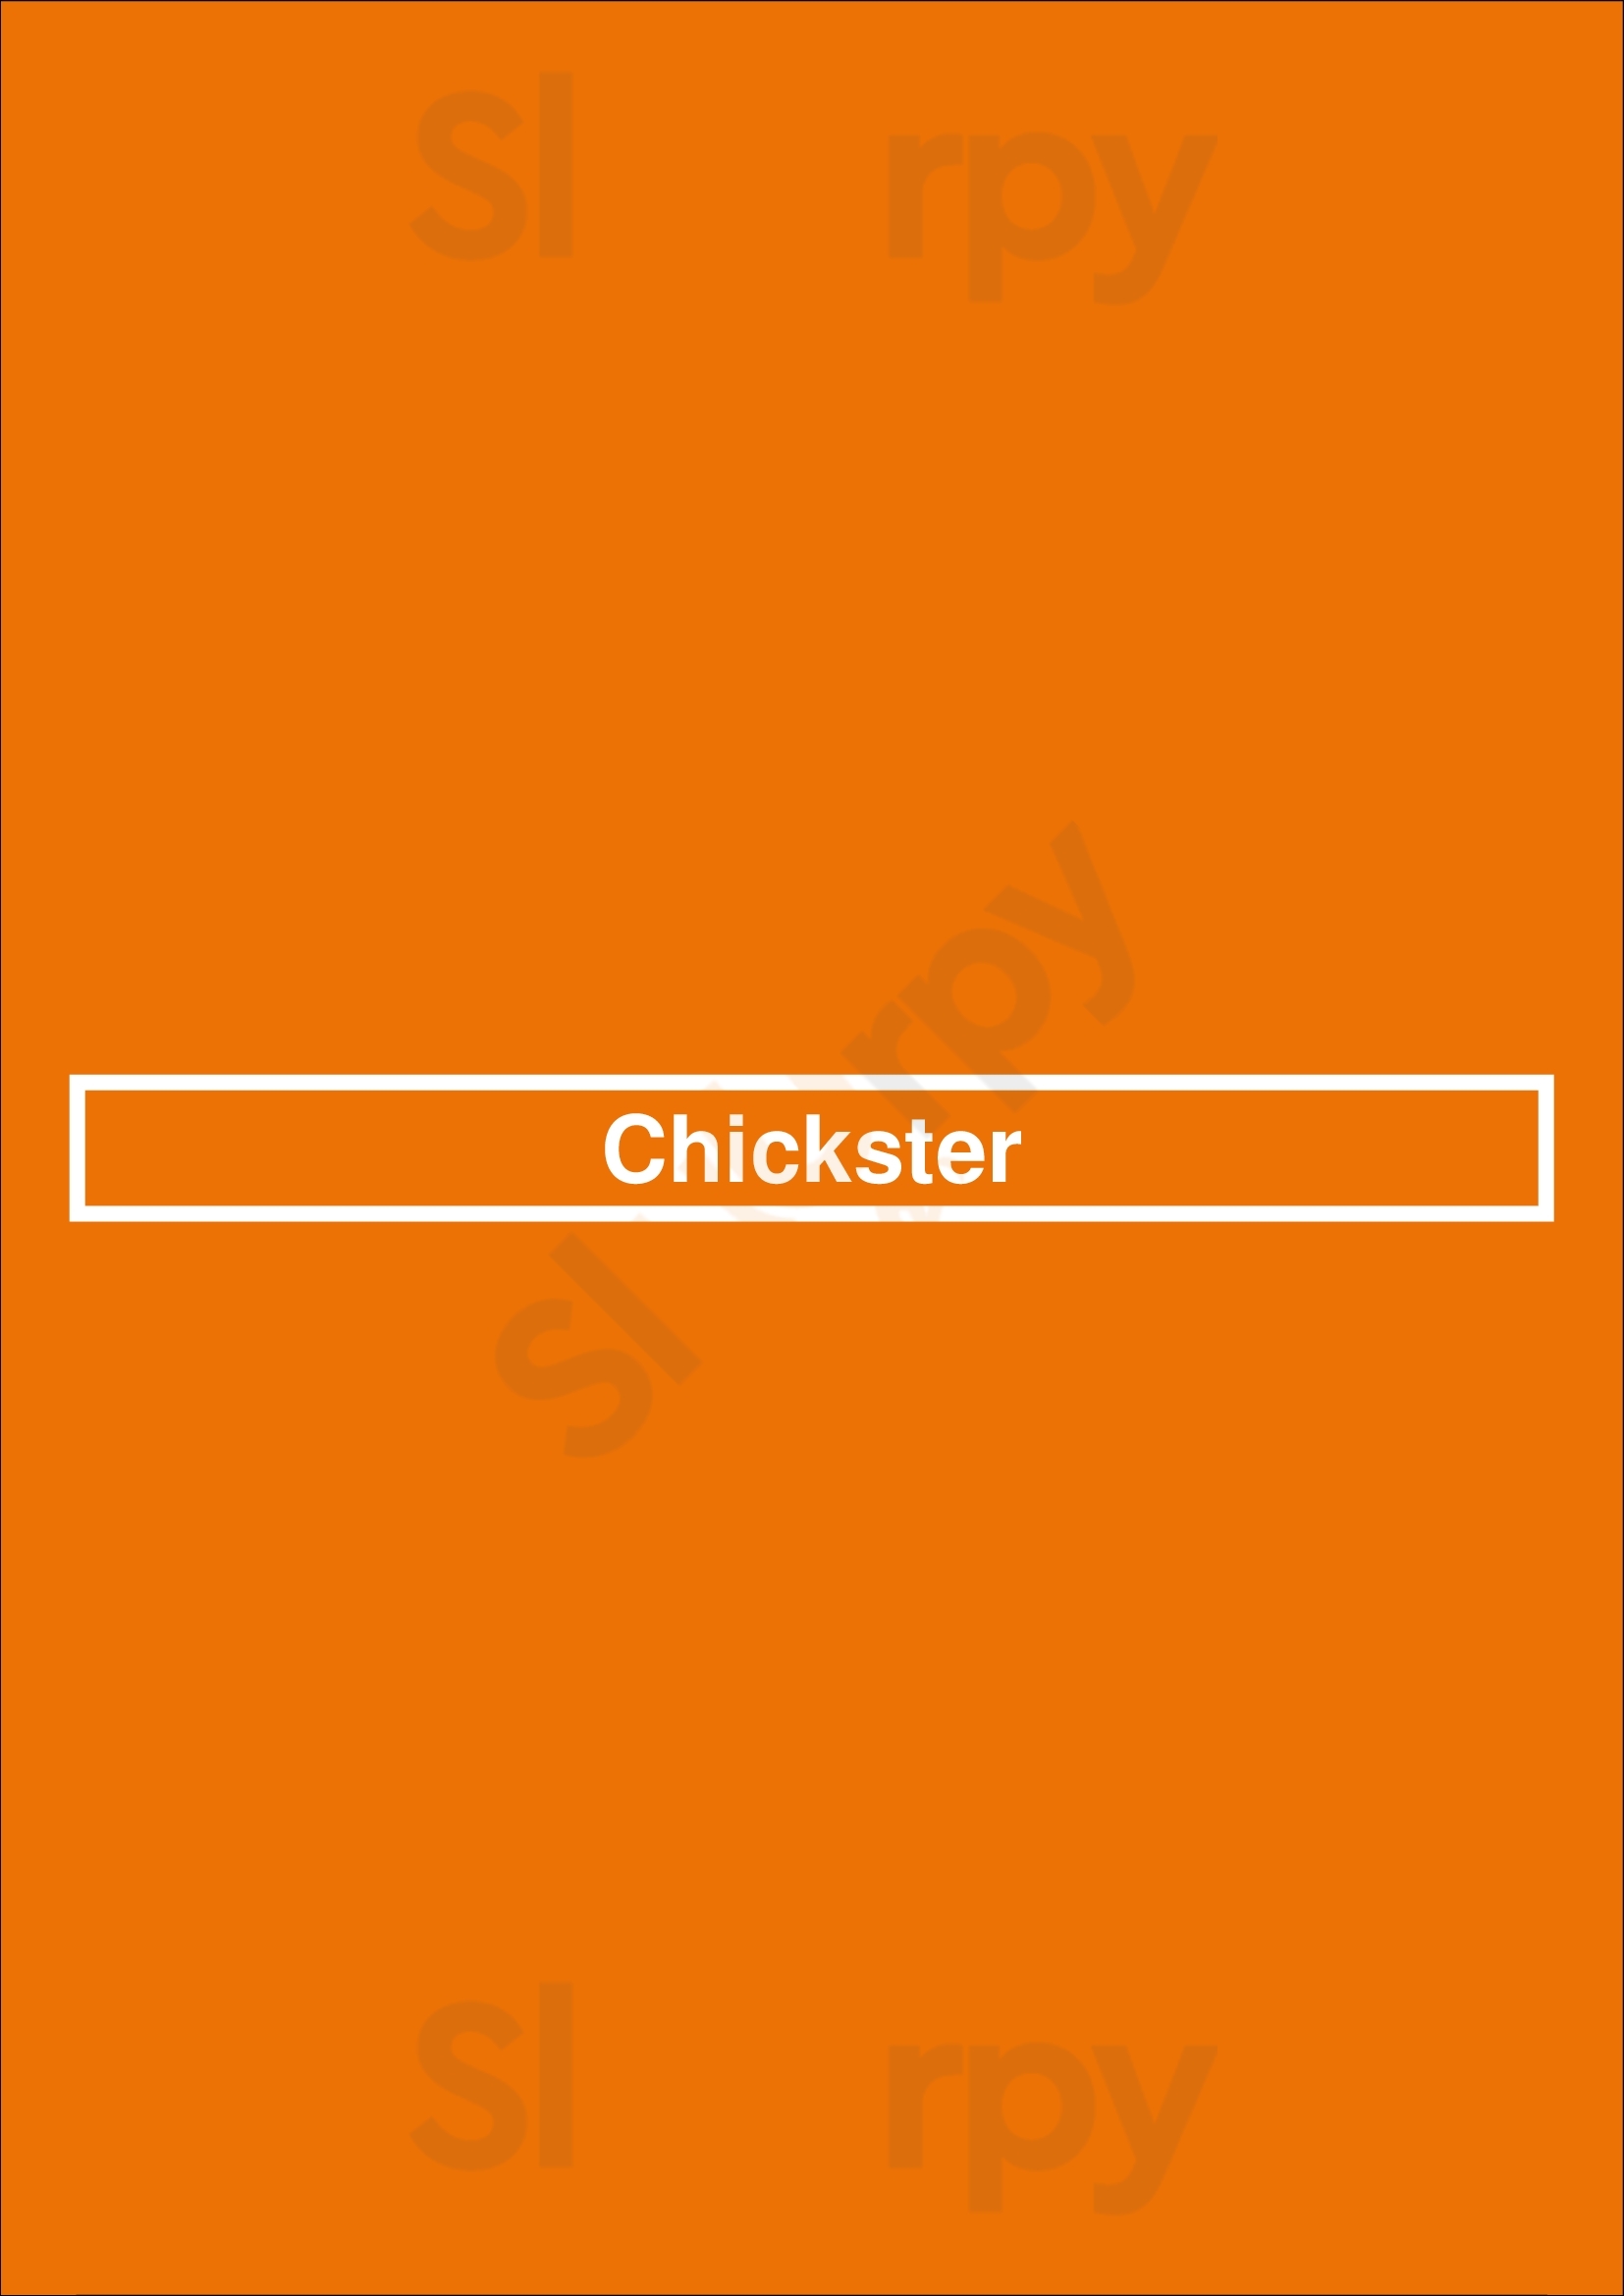 Chickster Barcelona Menu - 1